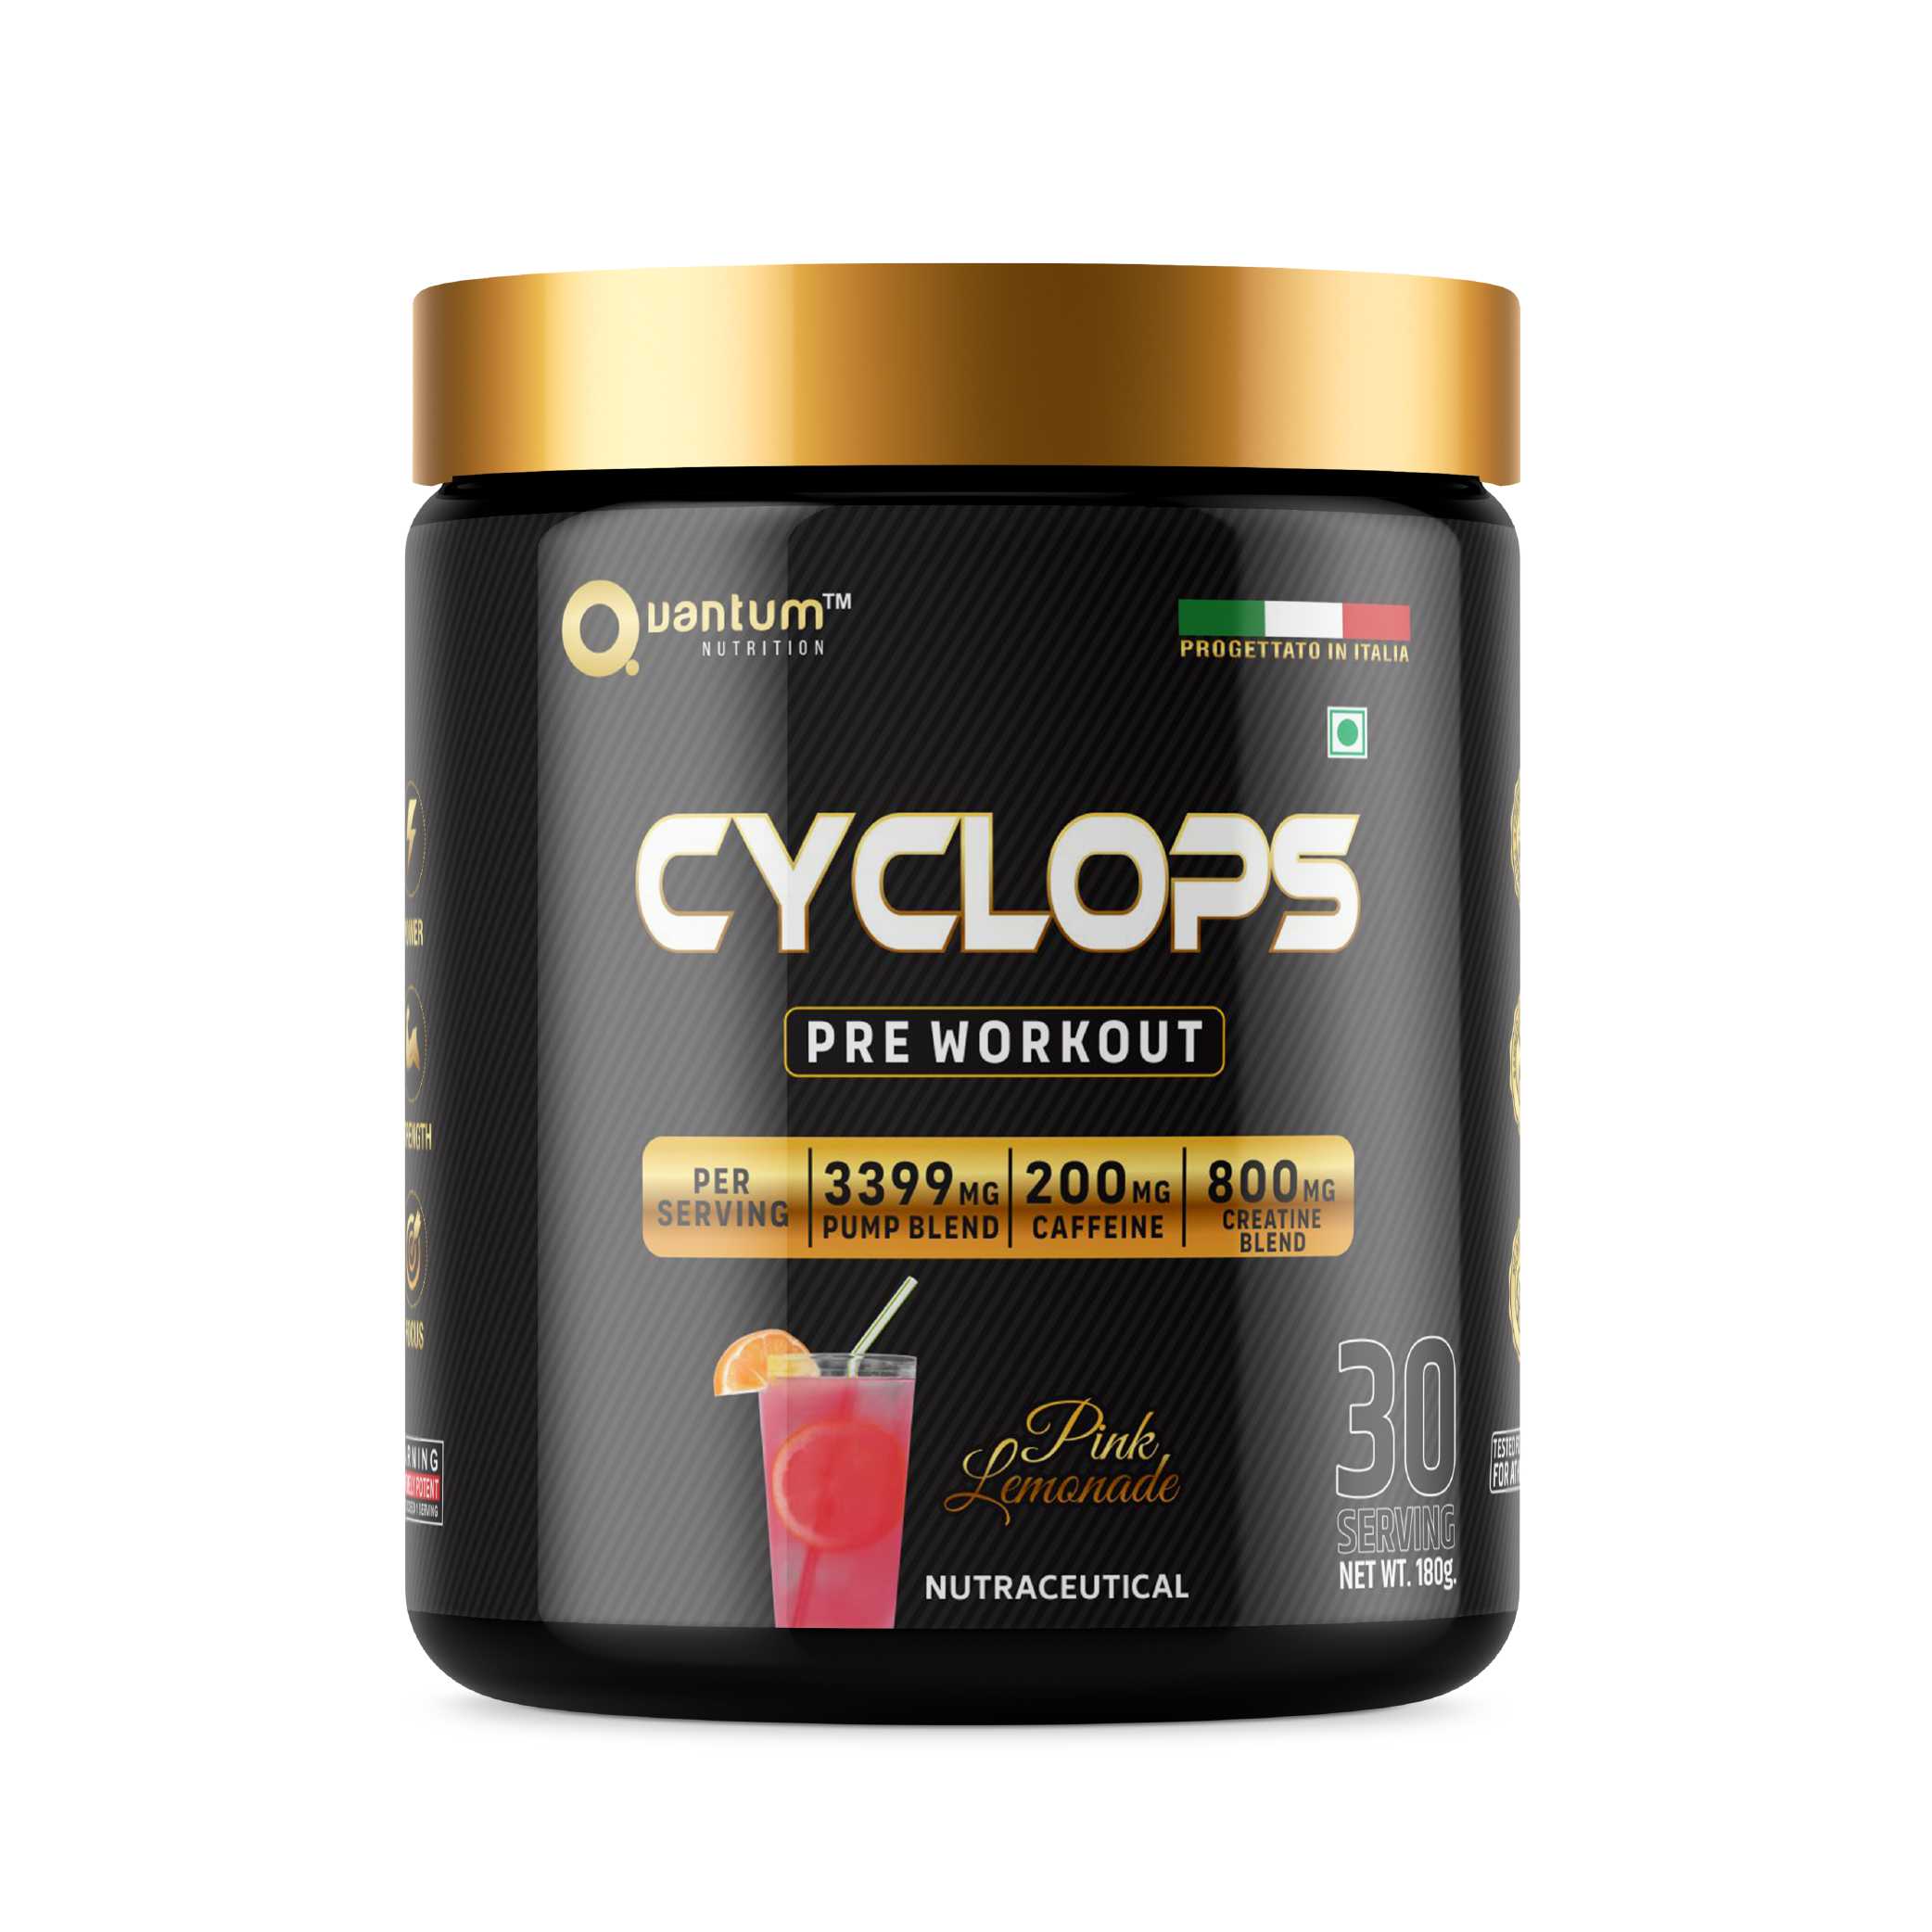 Quantum Nutrition's Cyclops pre workout in pink lemonade flavour.